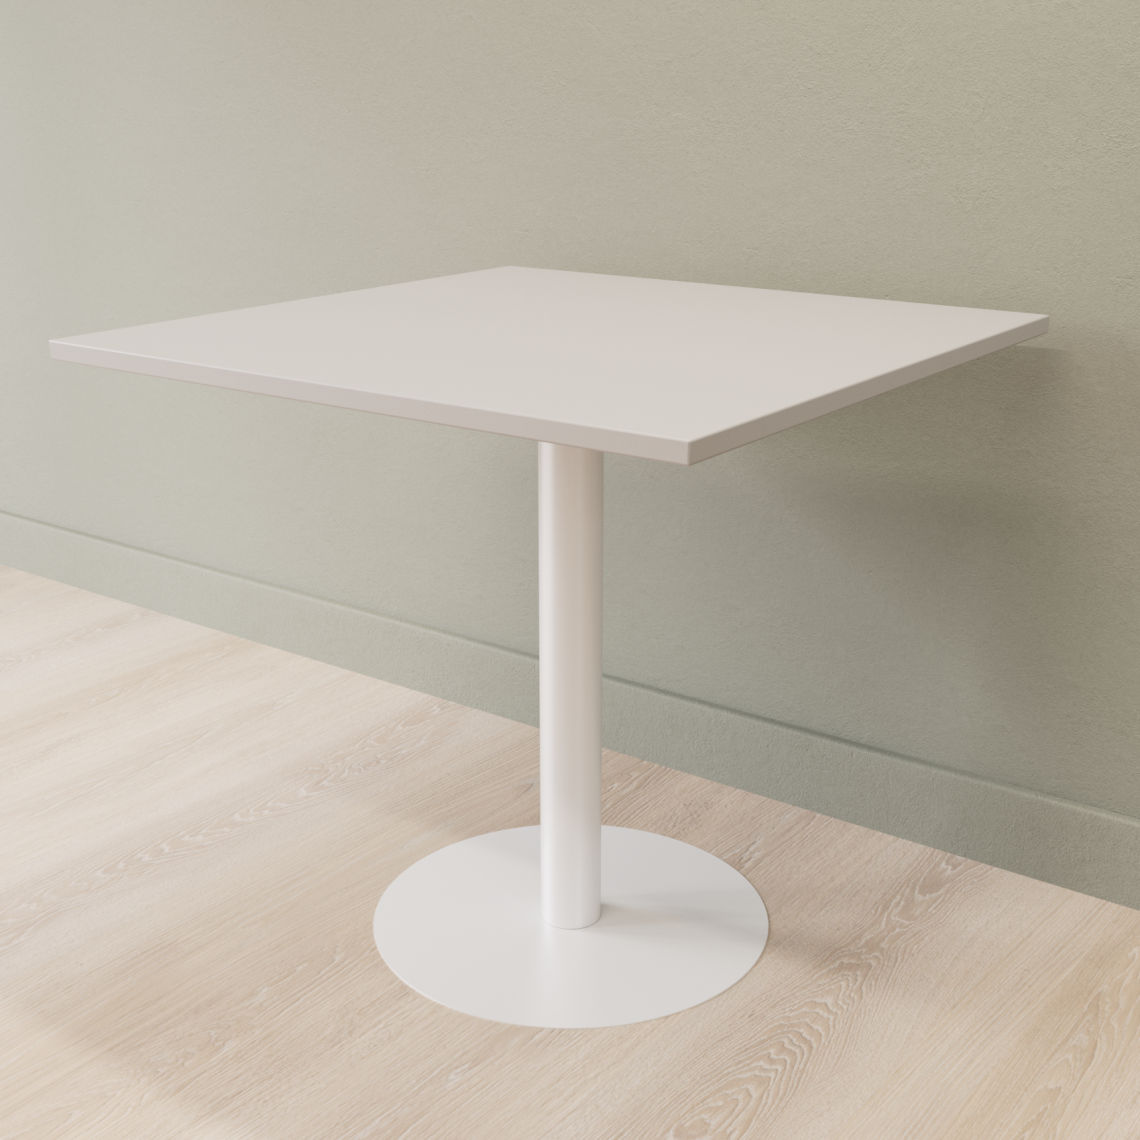 Cafebord med firkantet bordplade og rund fod, Størrelse 60 x 60 cm, Bordplade Lysegrå, Stativ Hvid